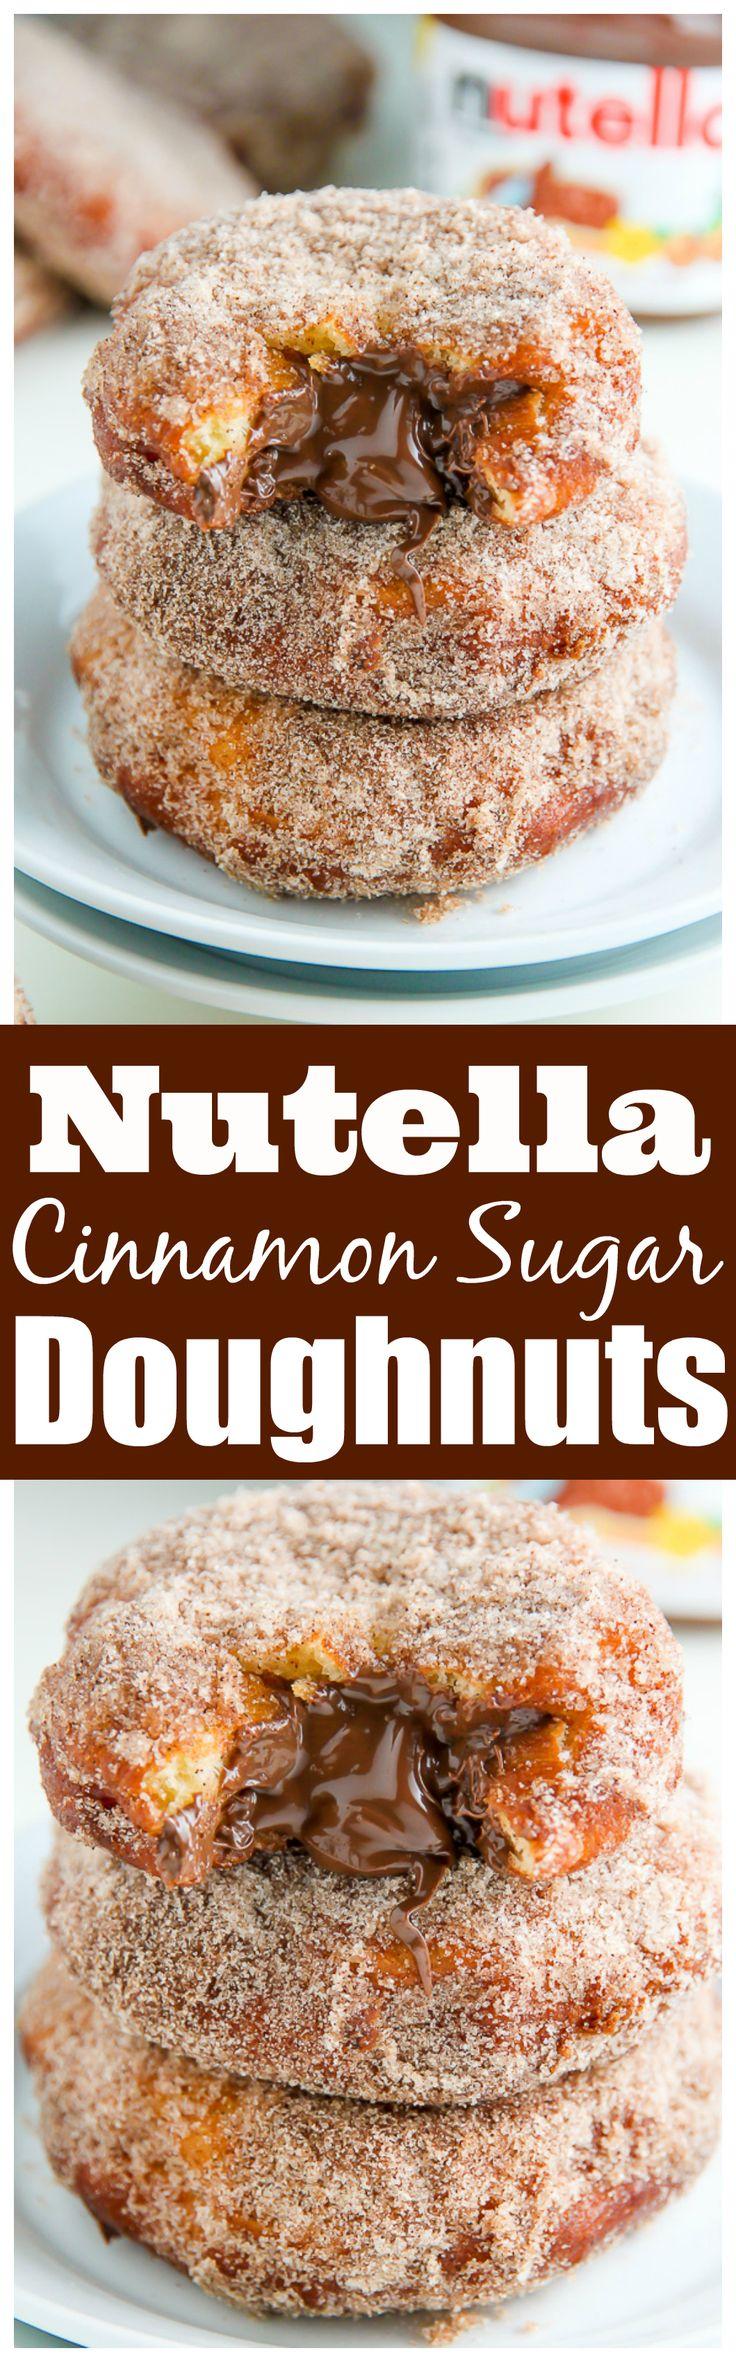 Wedding - Nutella Cinnamon Sugar Doughnuts